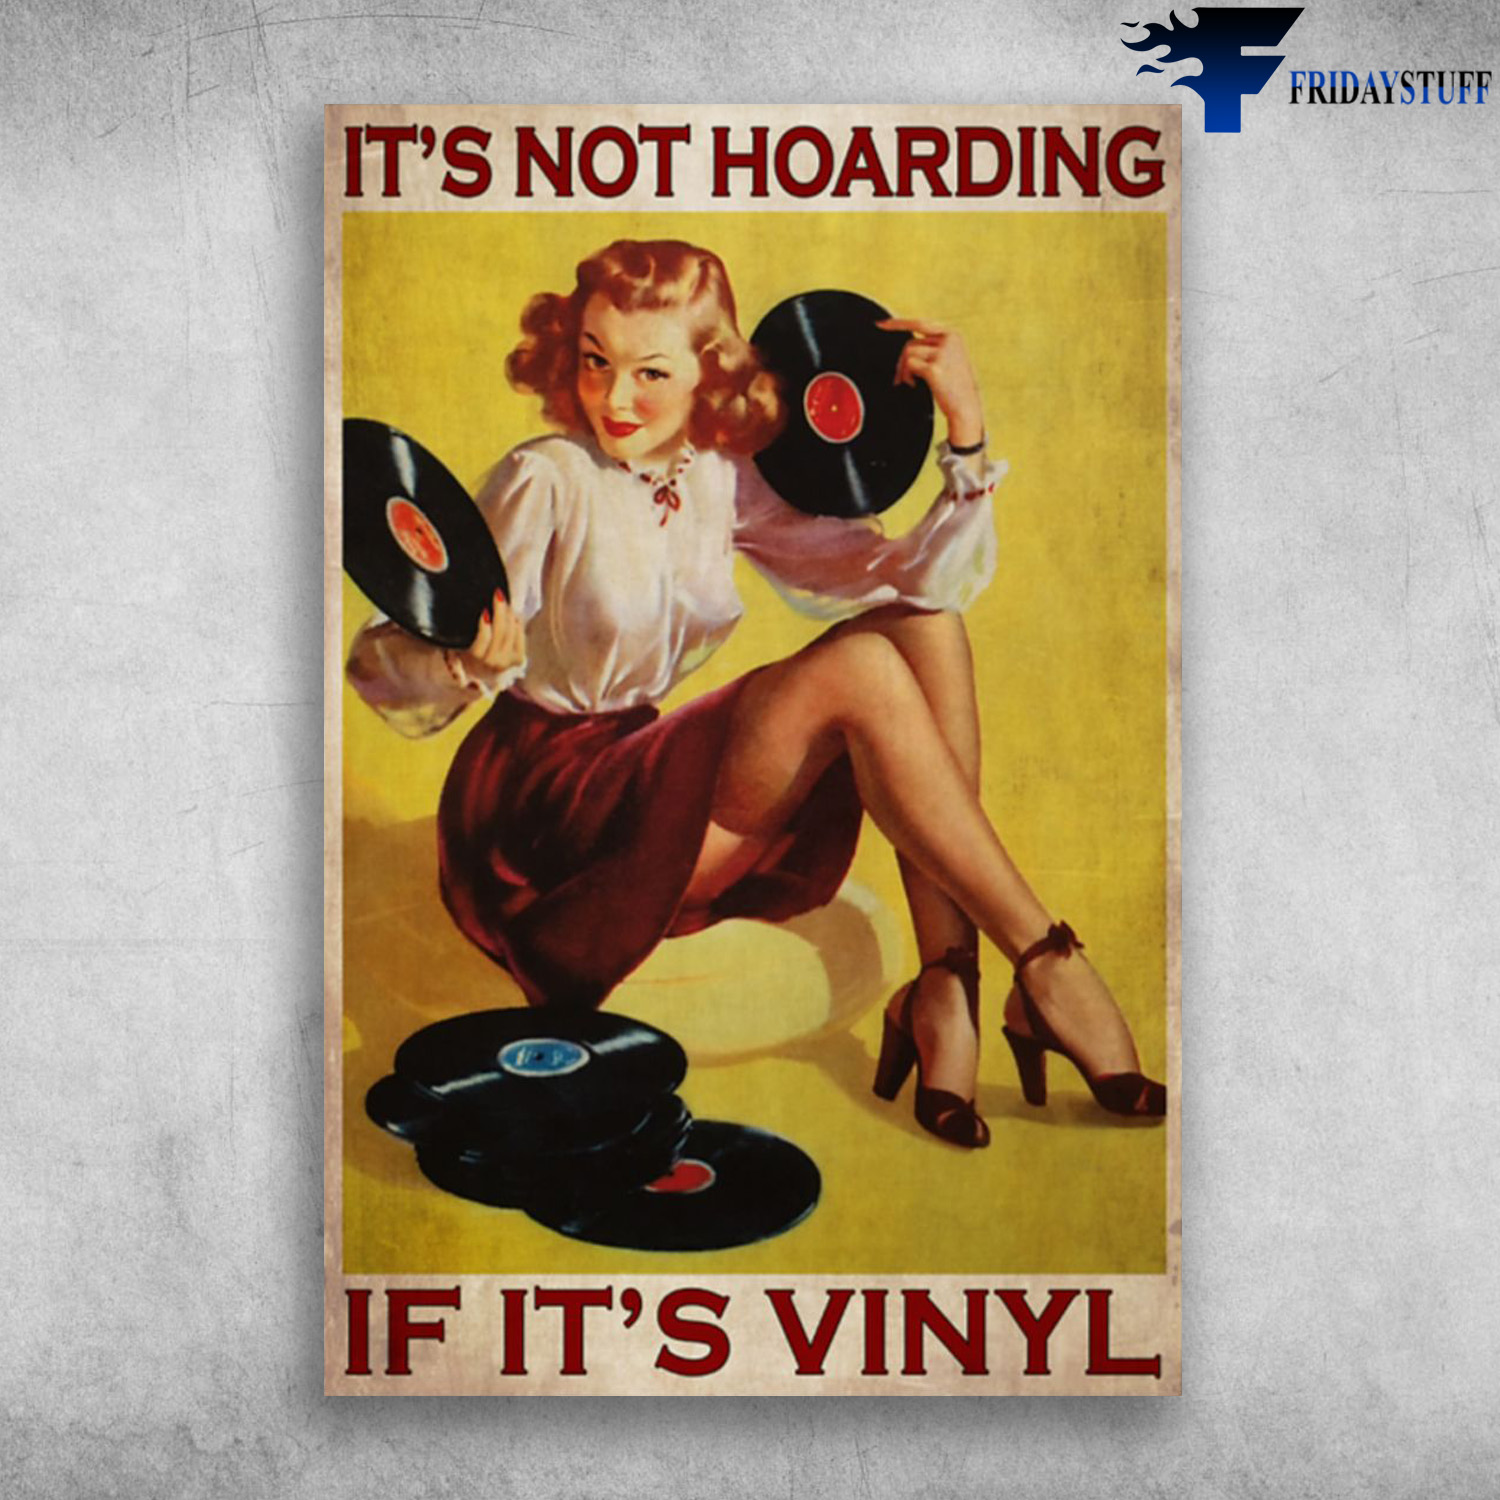 Girl Love Vinyl - It's Not Hoarding, If It's Vinyl